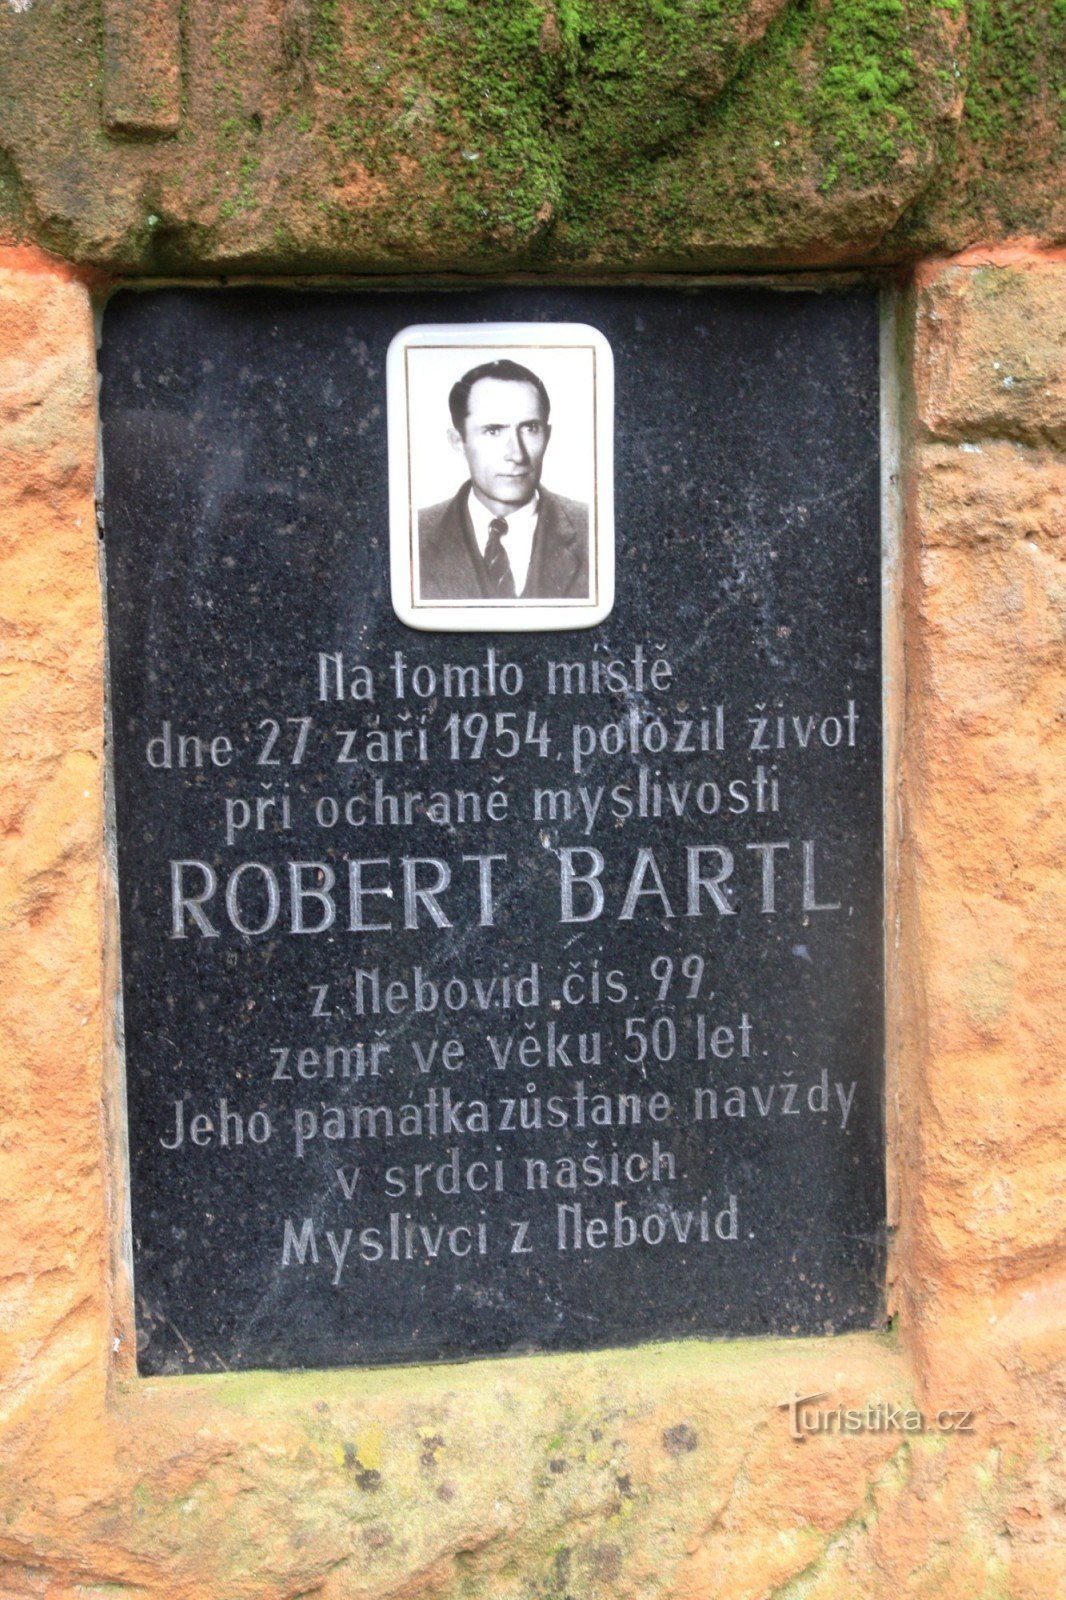 Robert Bartle Monument